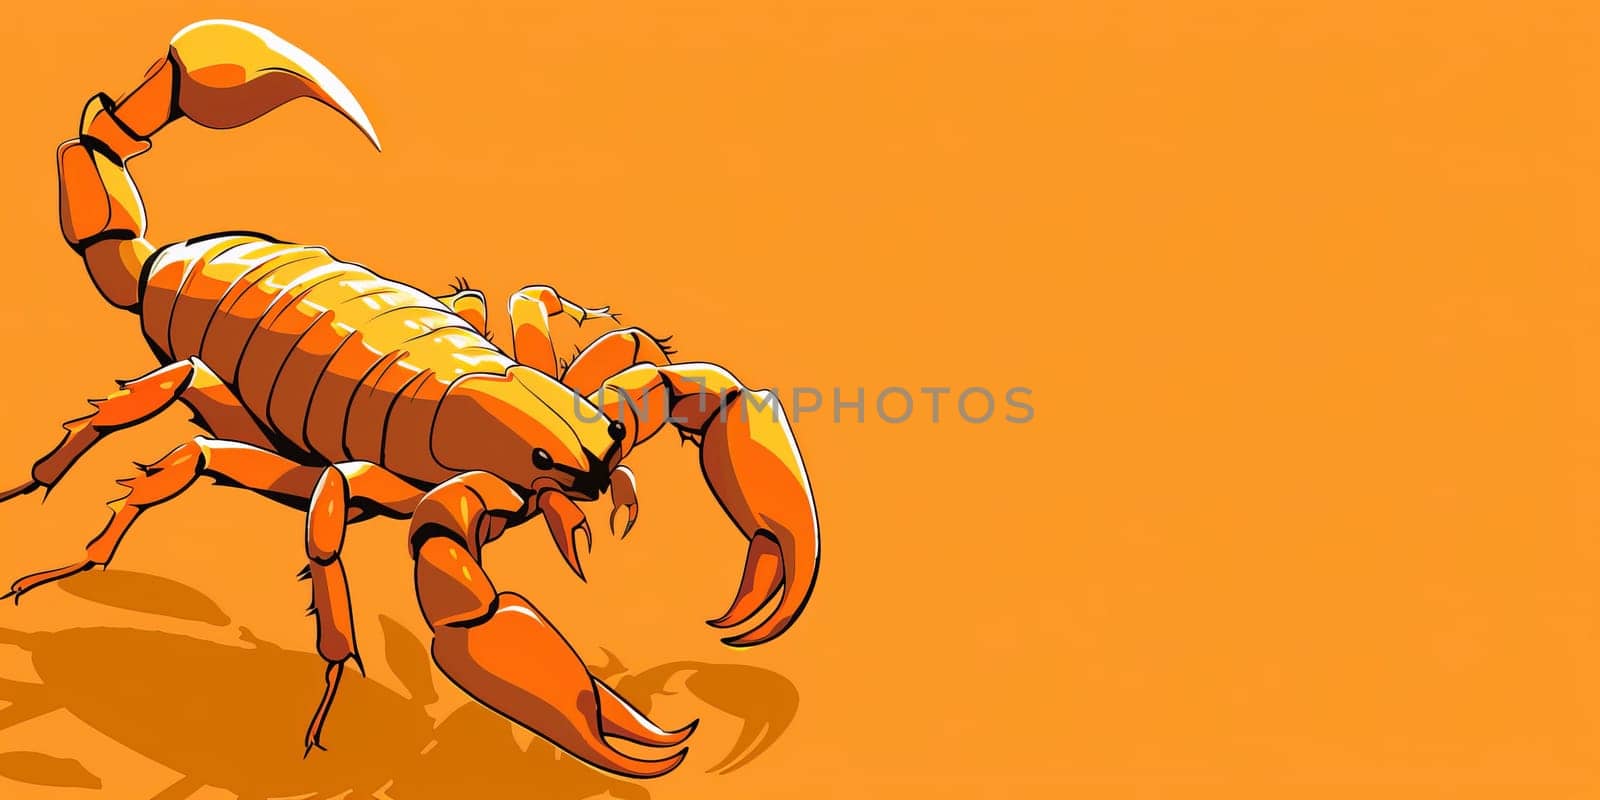 A yellow scorpion crawling on vibrant orange backdrop